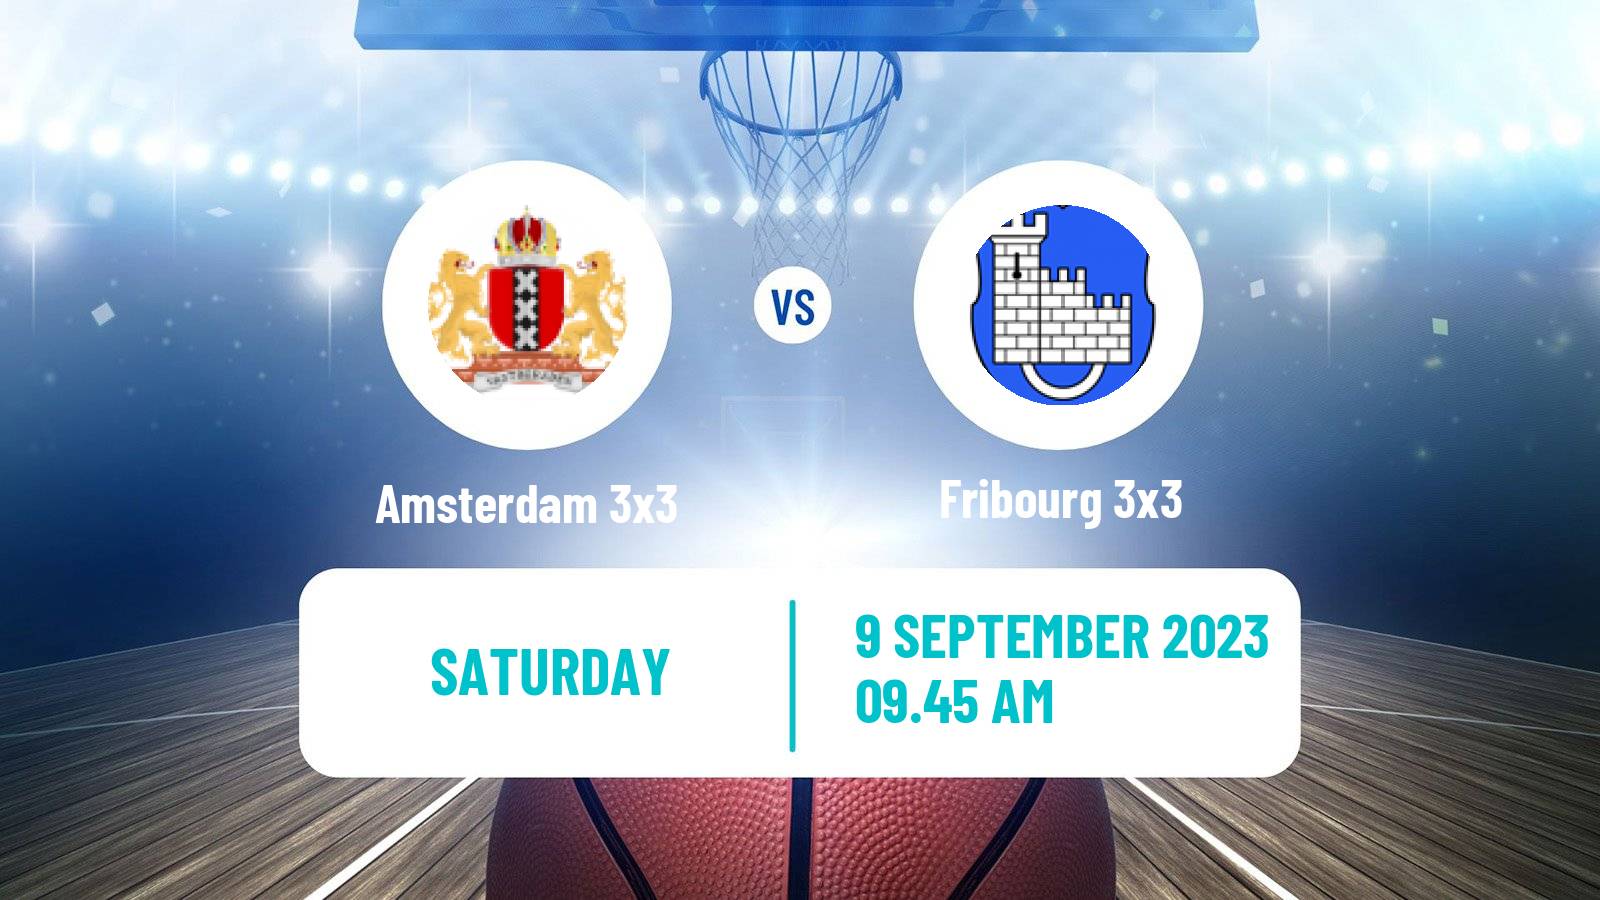 Basketball World Tour Constanta 3x3 Amsterdam 3x3 - Fribourg 3x3